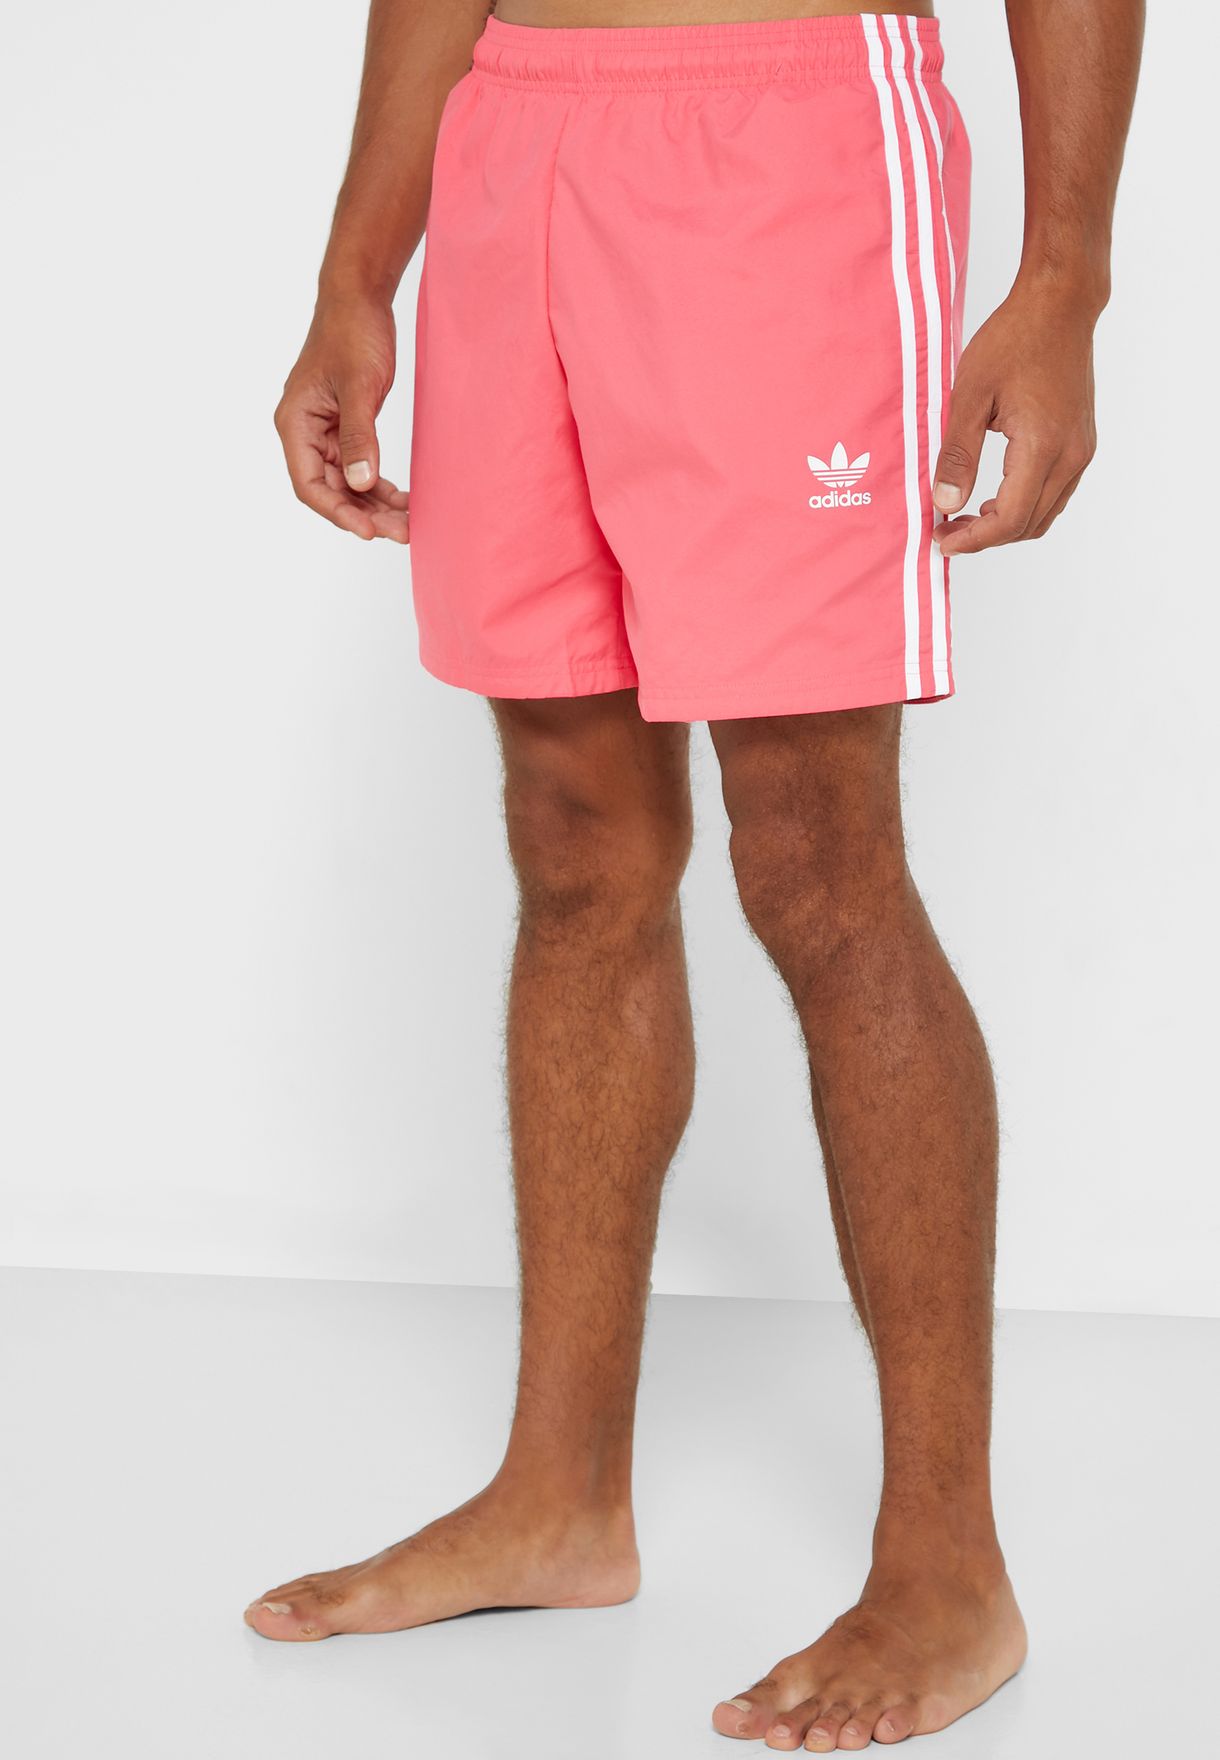 adidas swim shorts sale